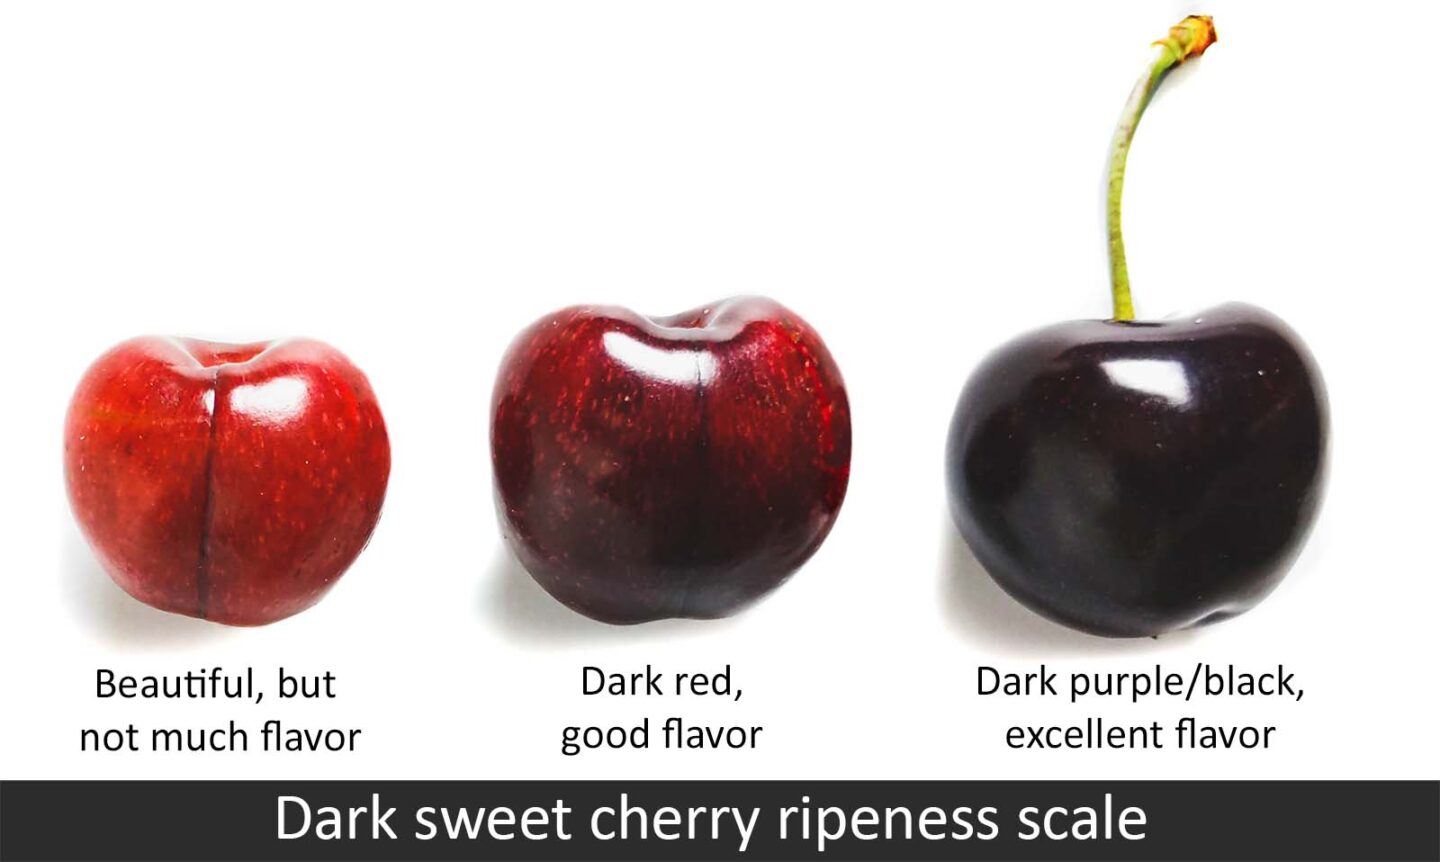 Dark sweet cherry ripe when black (like bing, stella, and chelan)